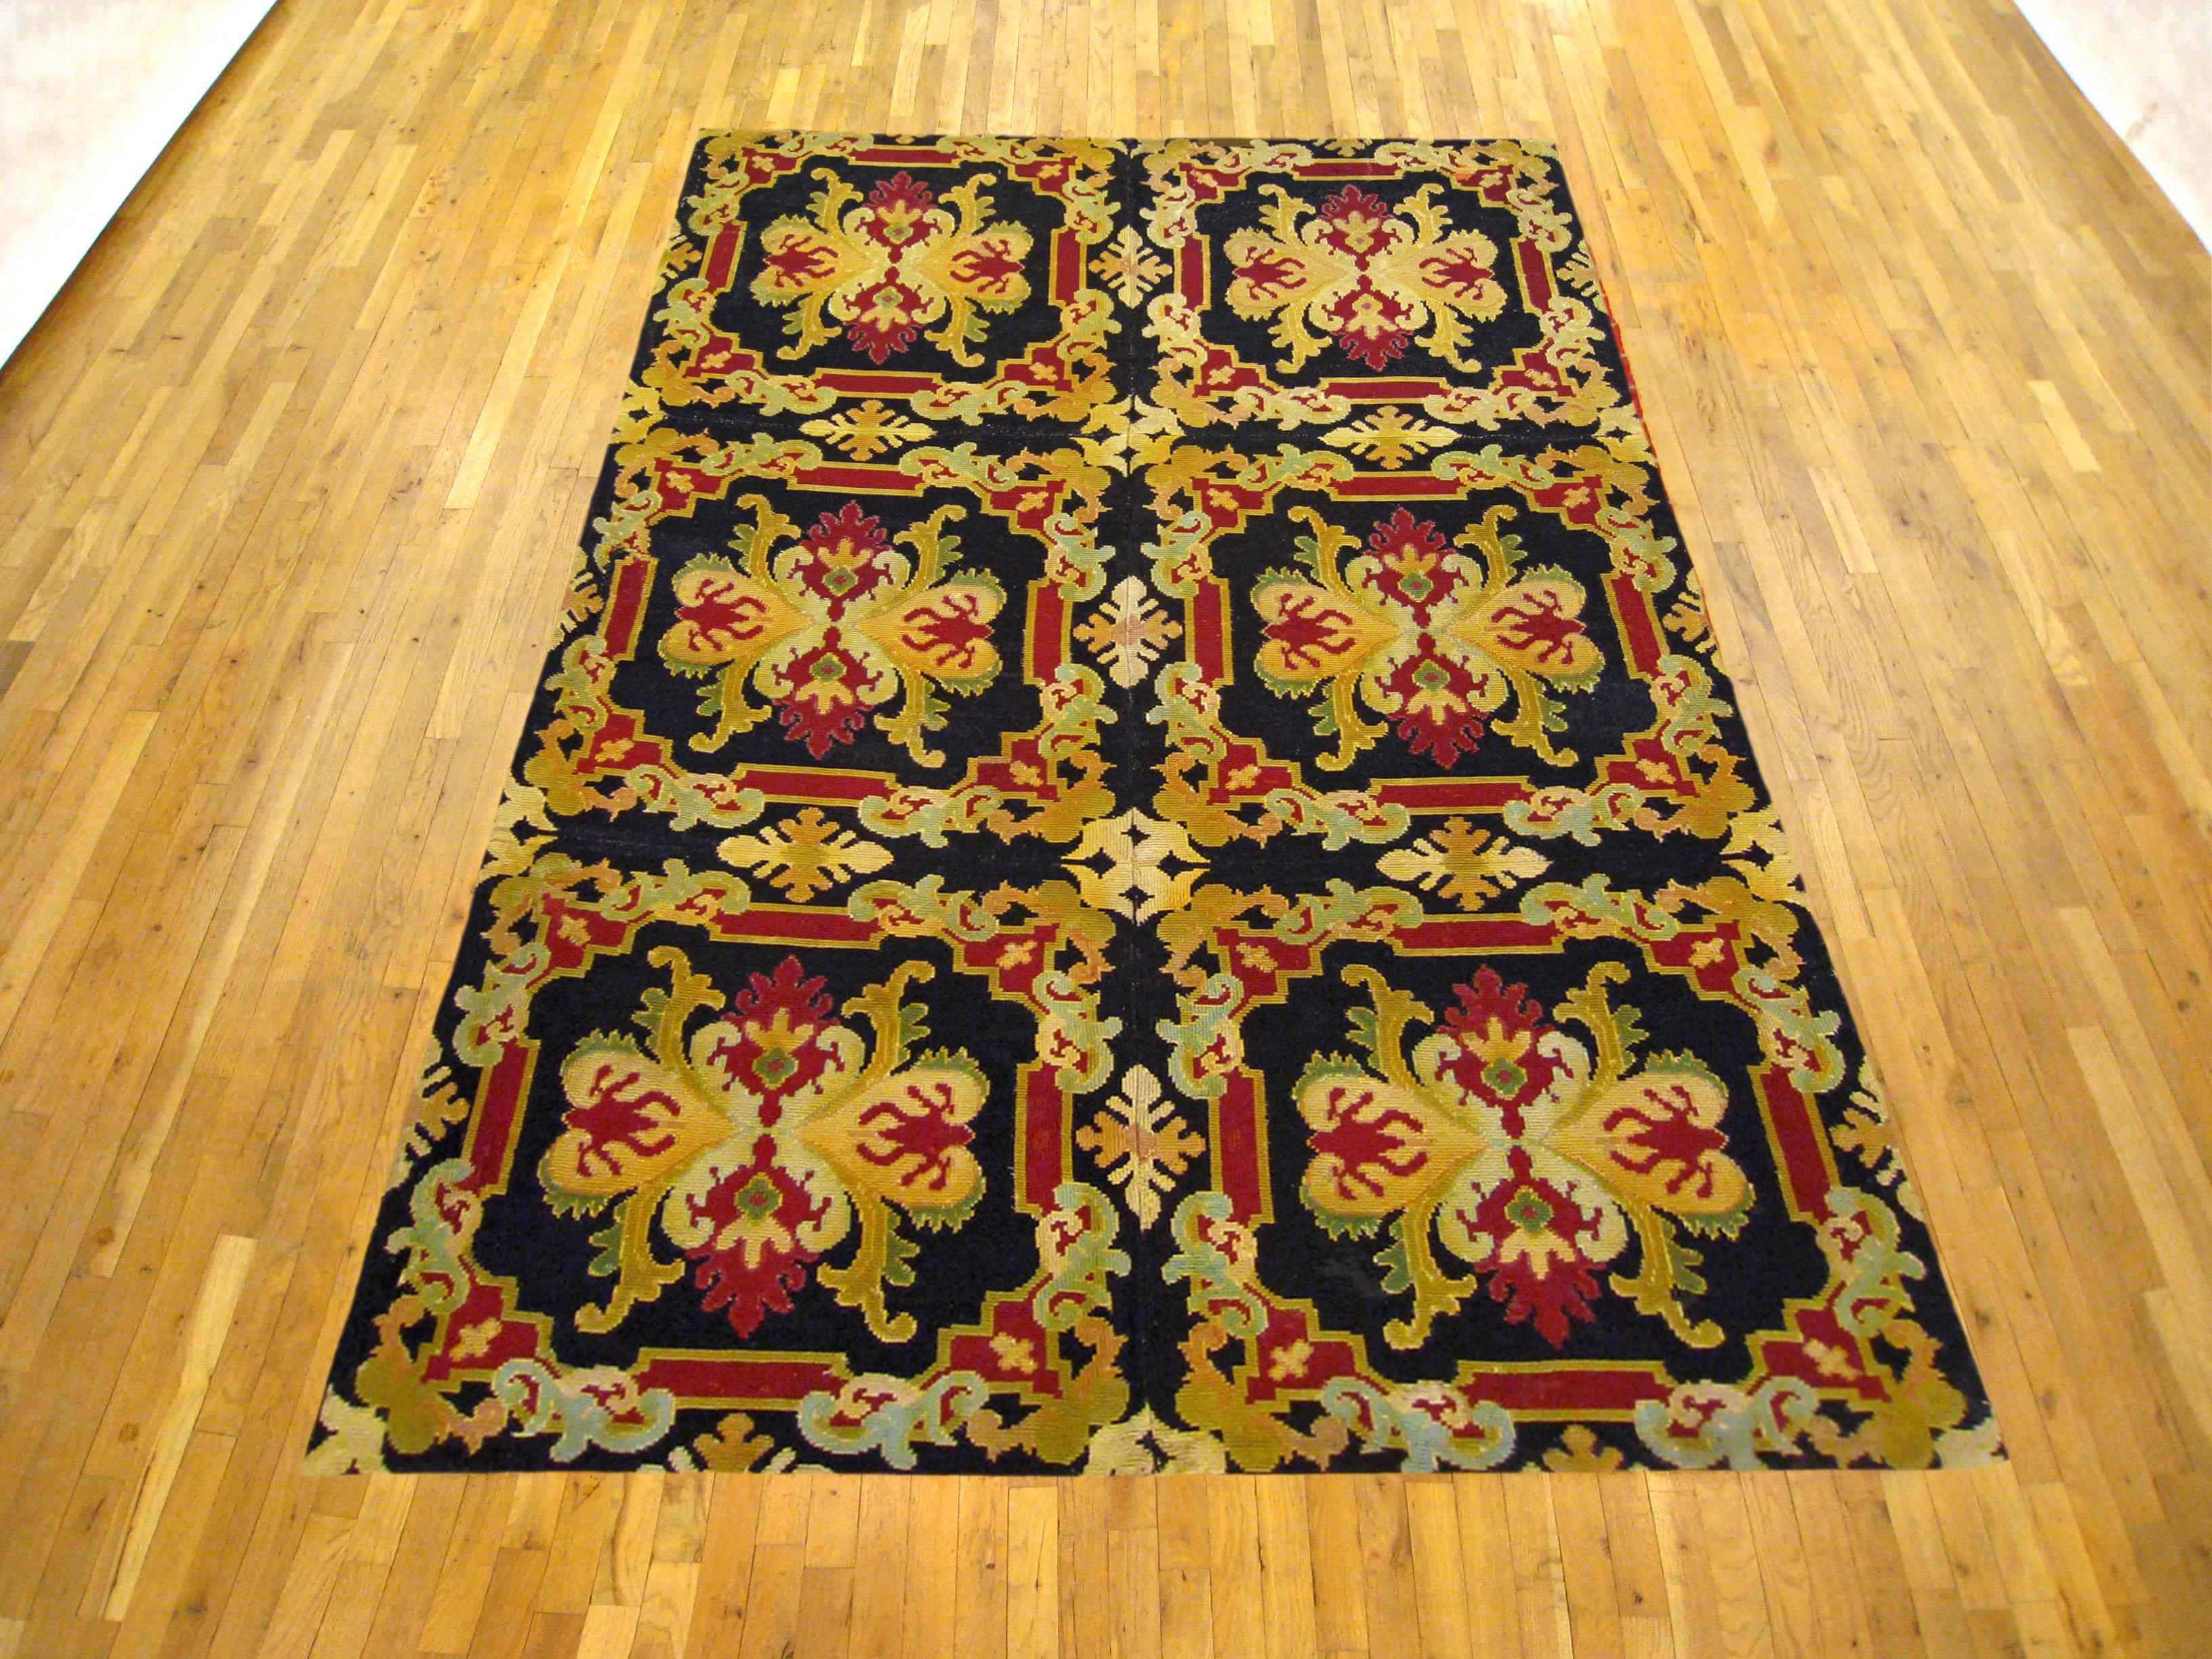 An antique European decorative needlepoint carpet, circa 1890, size 6'9